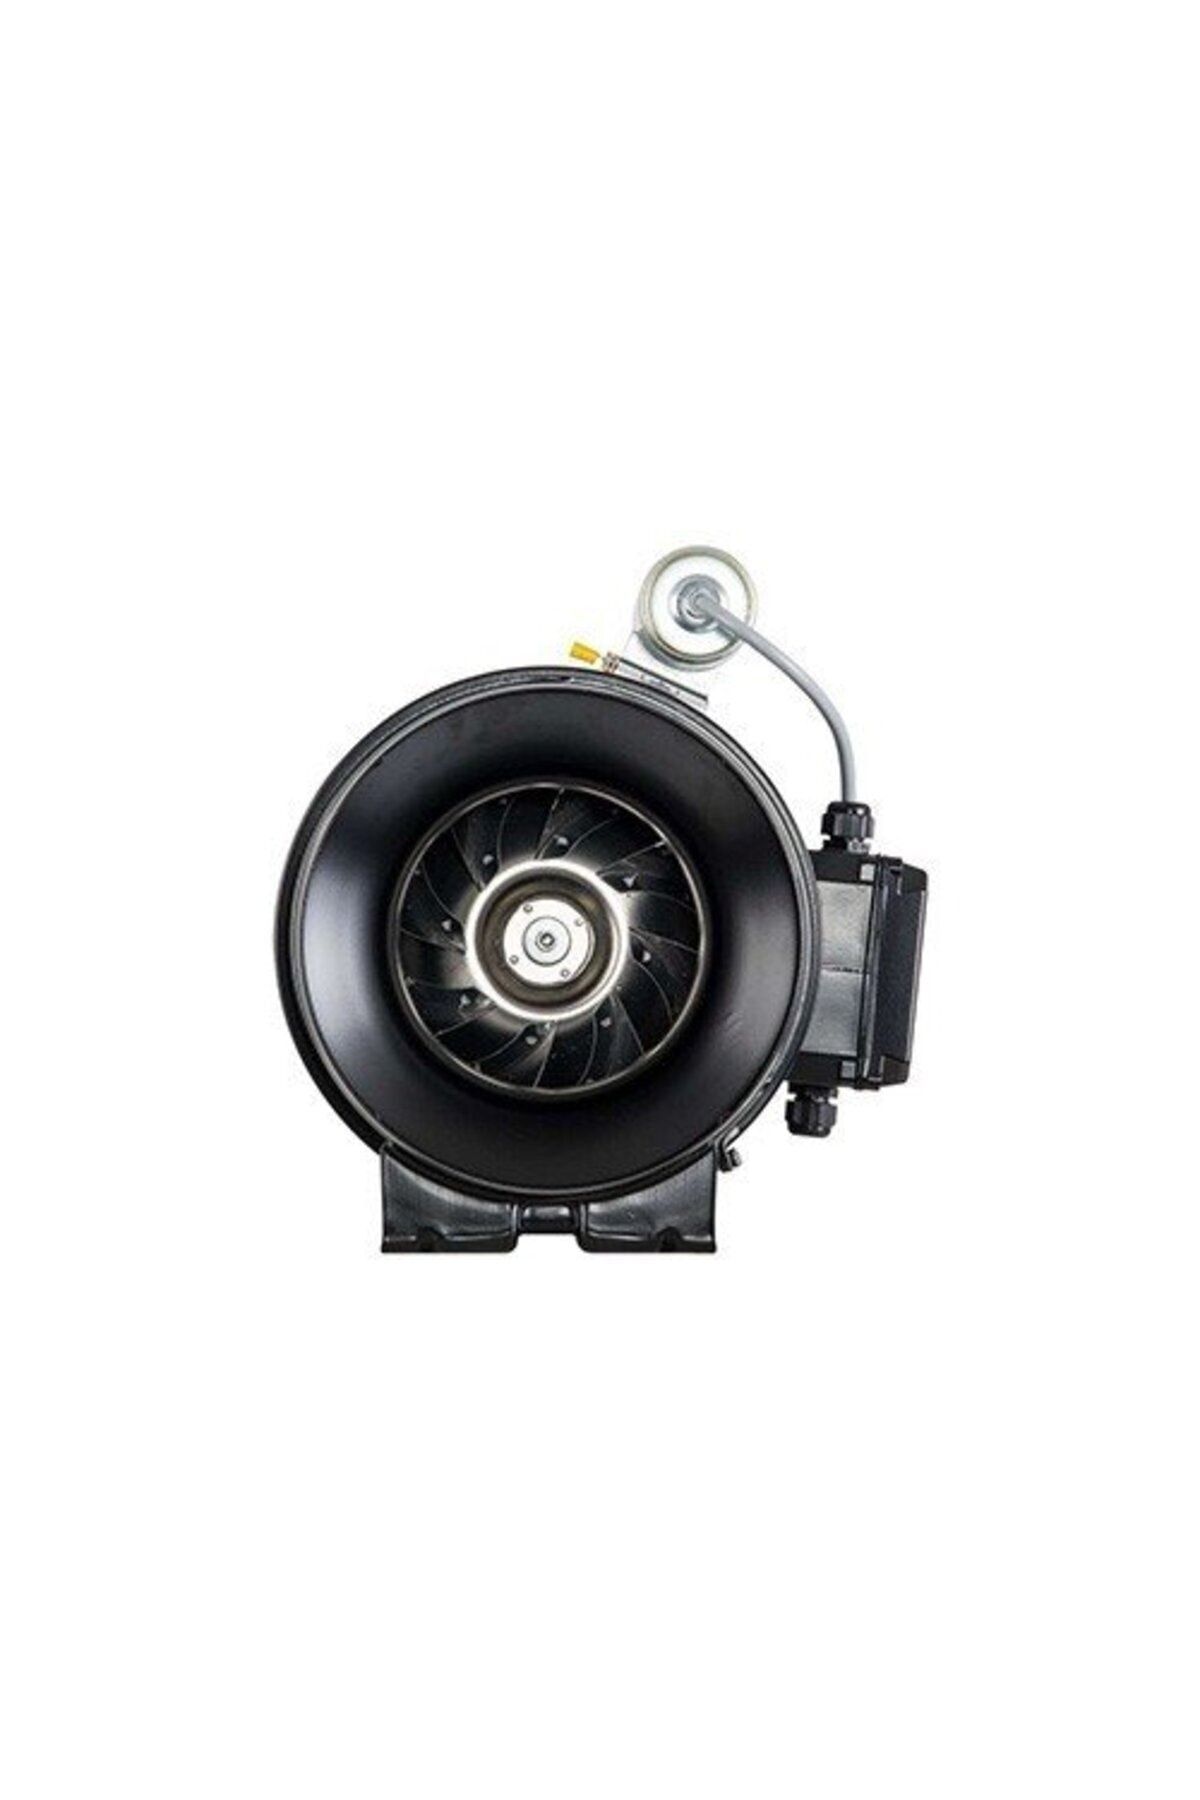 SP S&p Td-800/200 Kanal Tipi Exproof Fan 1020 M³/h